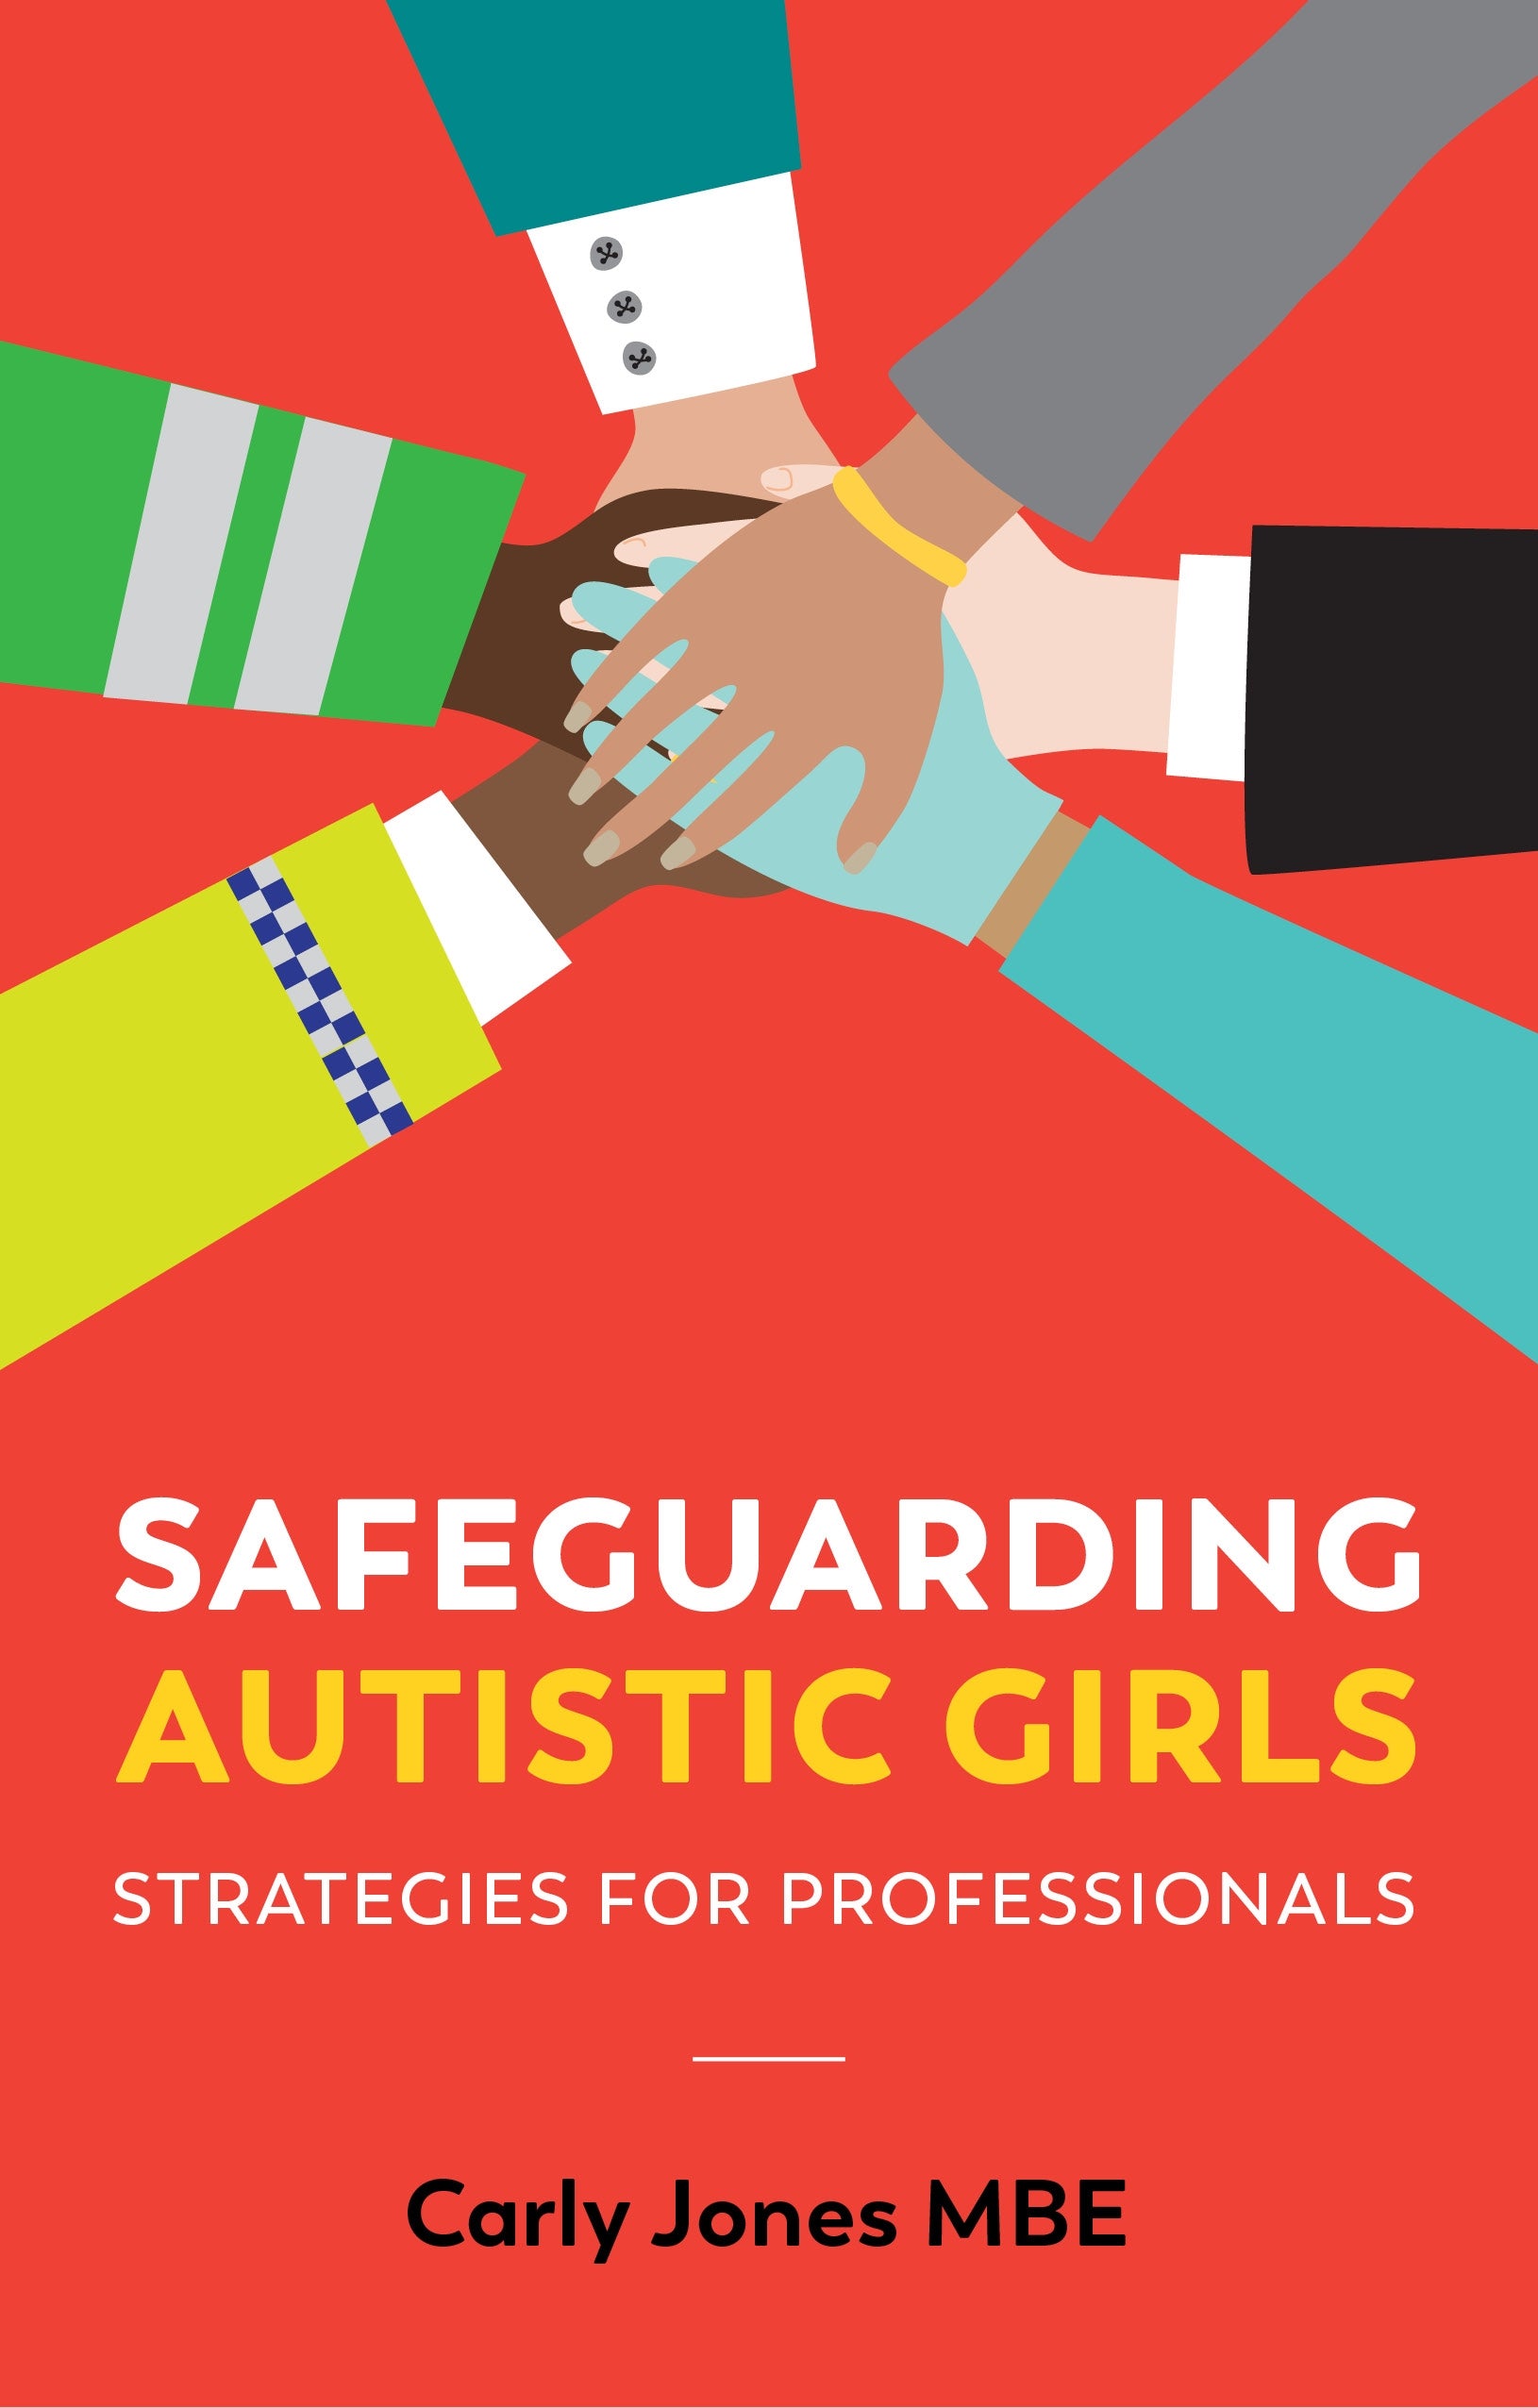 Safeguarding Autistic Girls by Luke Beardon, Carly Jones